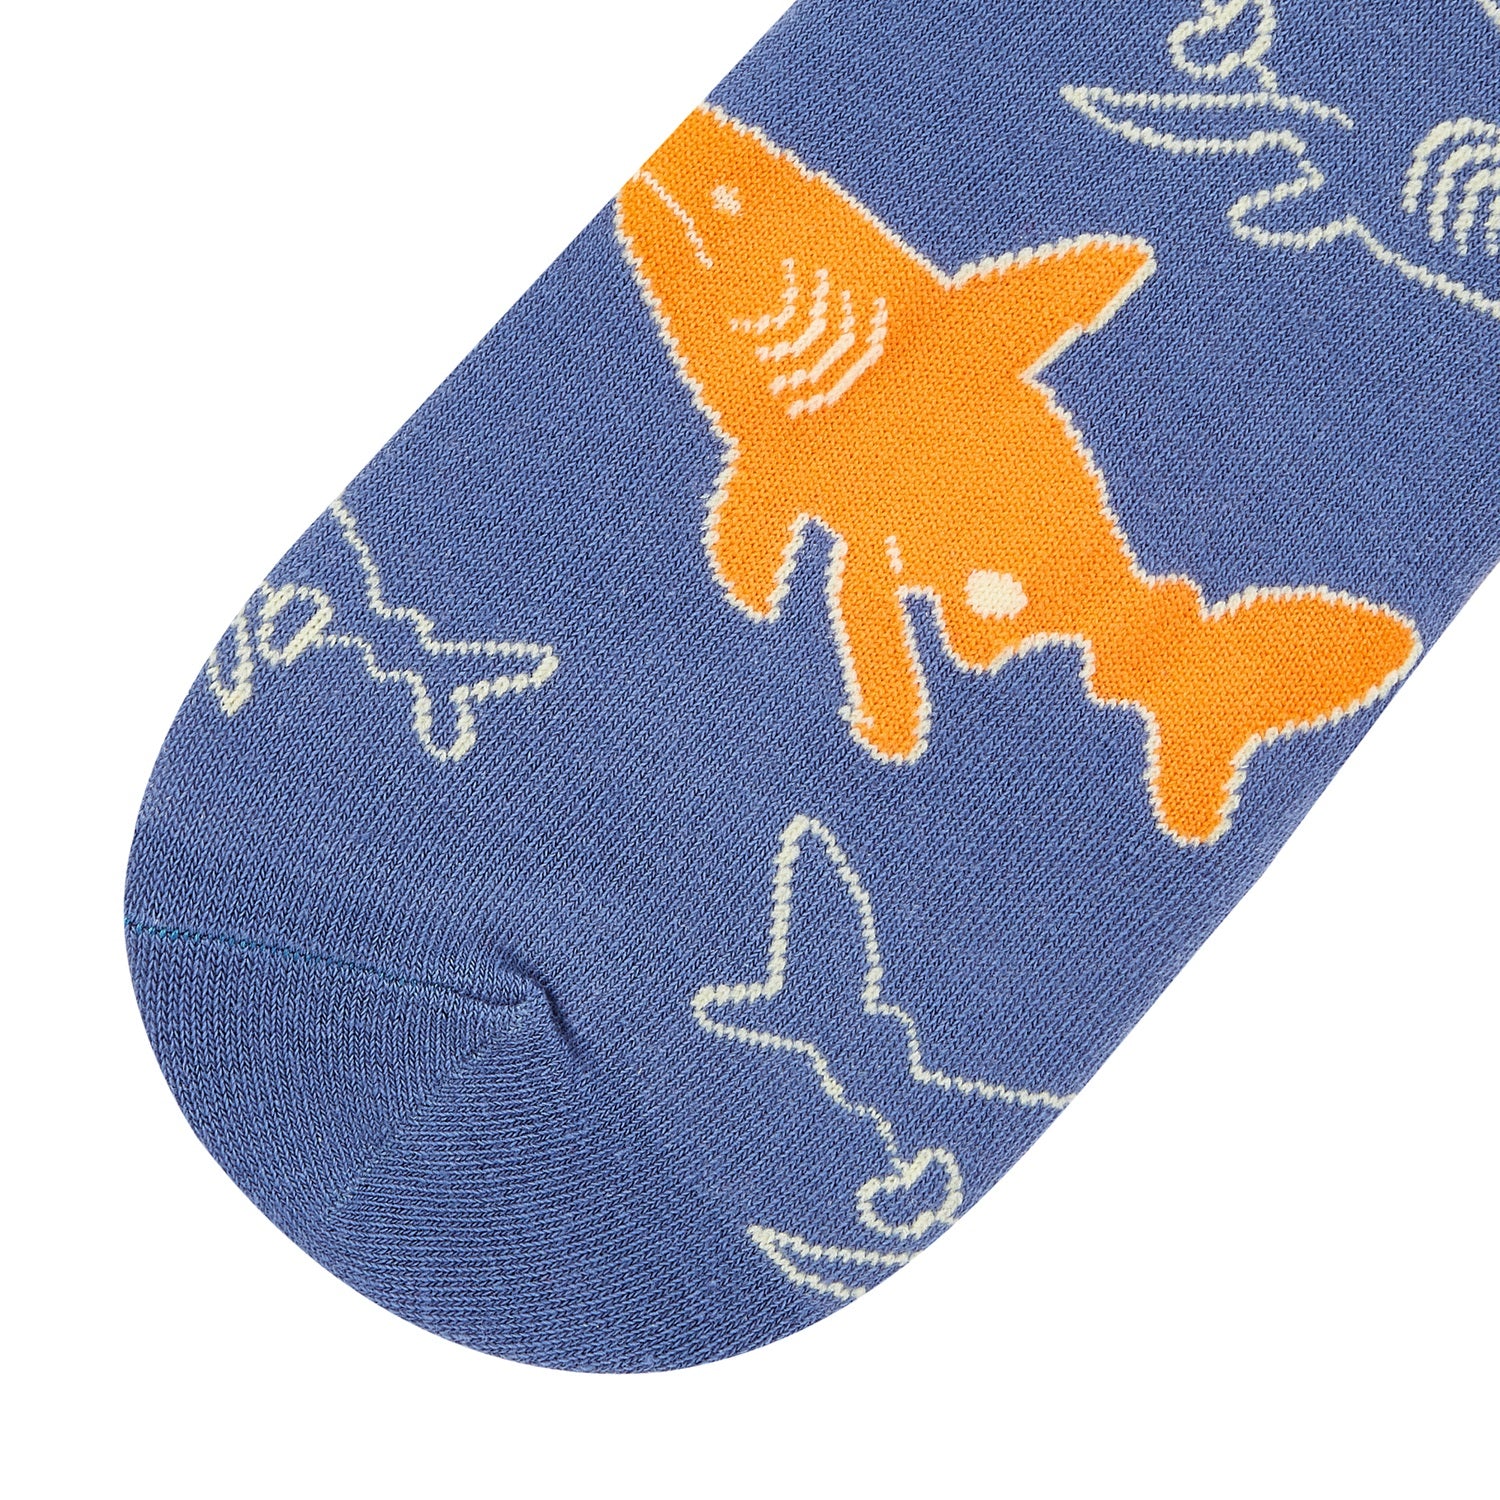 Shark Printed Ankle Socks - IDENTITY Apparel Shop